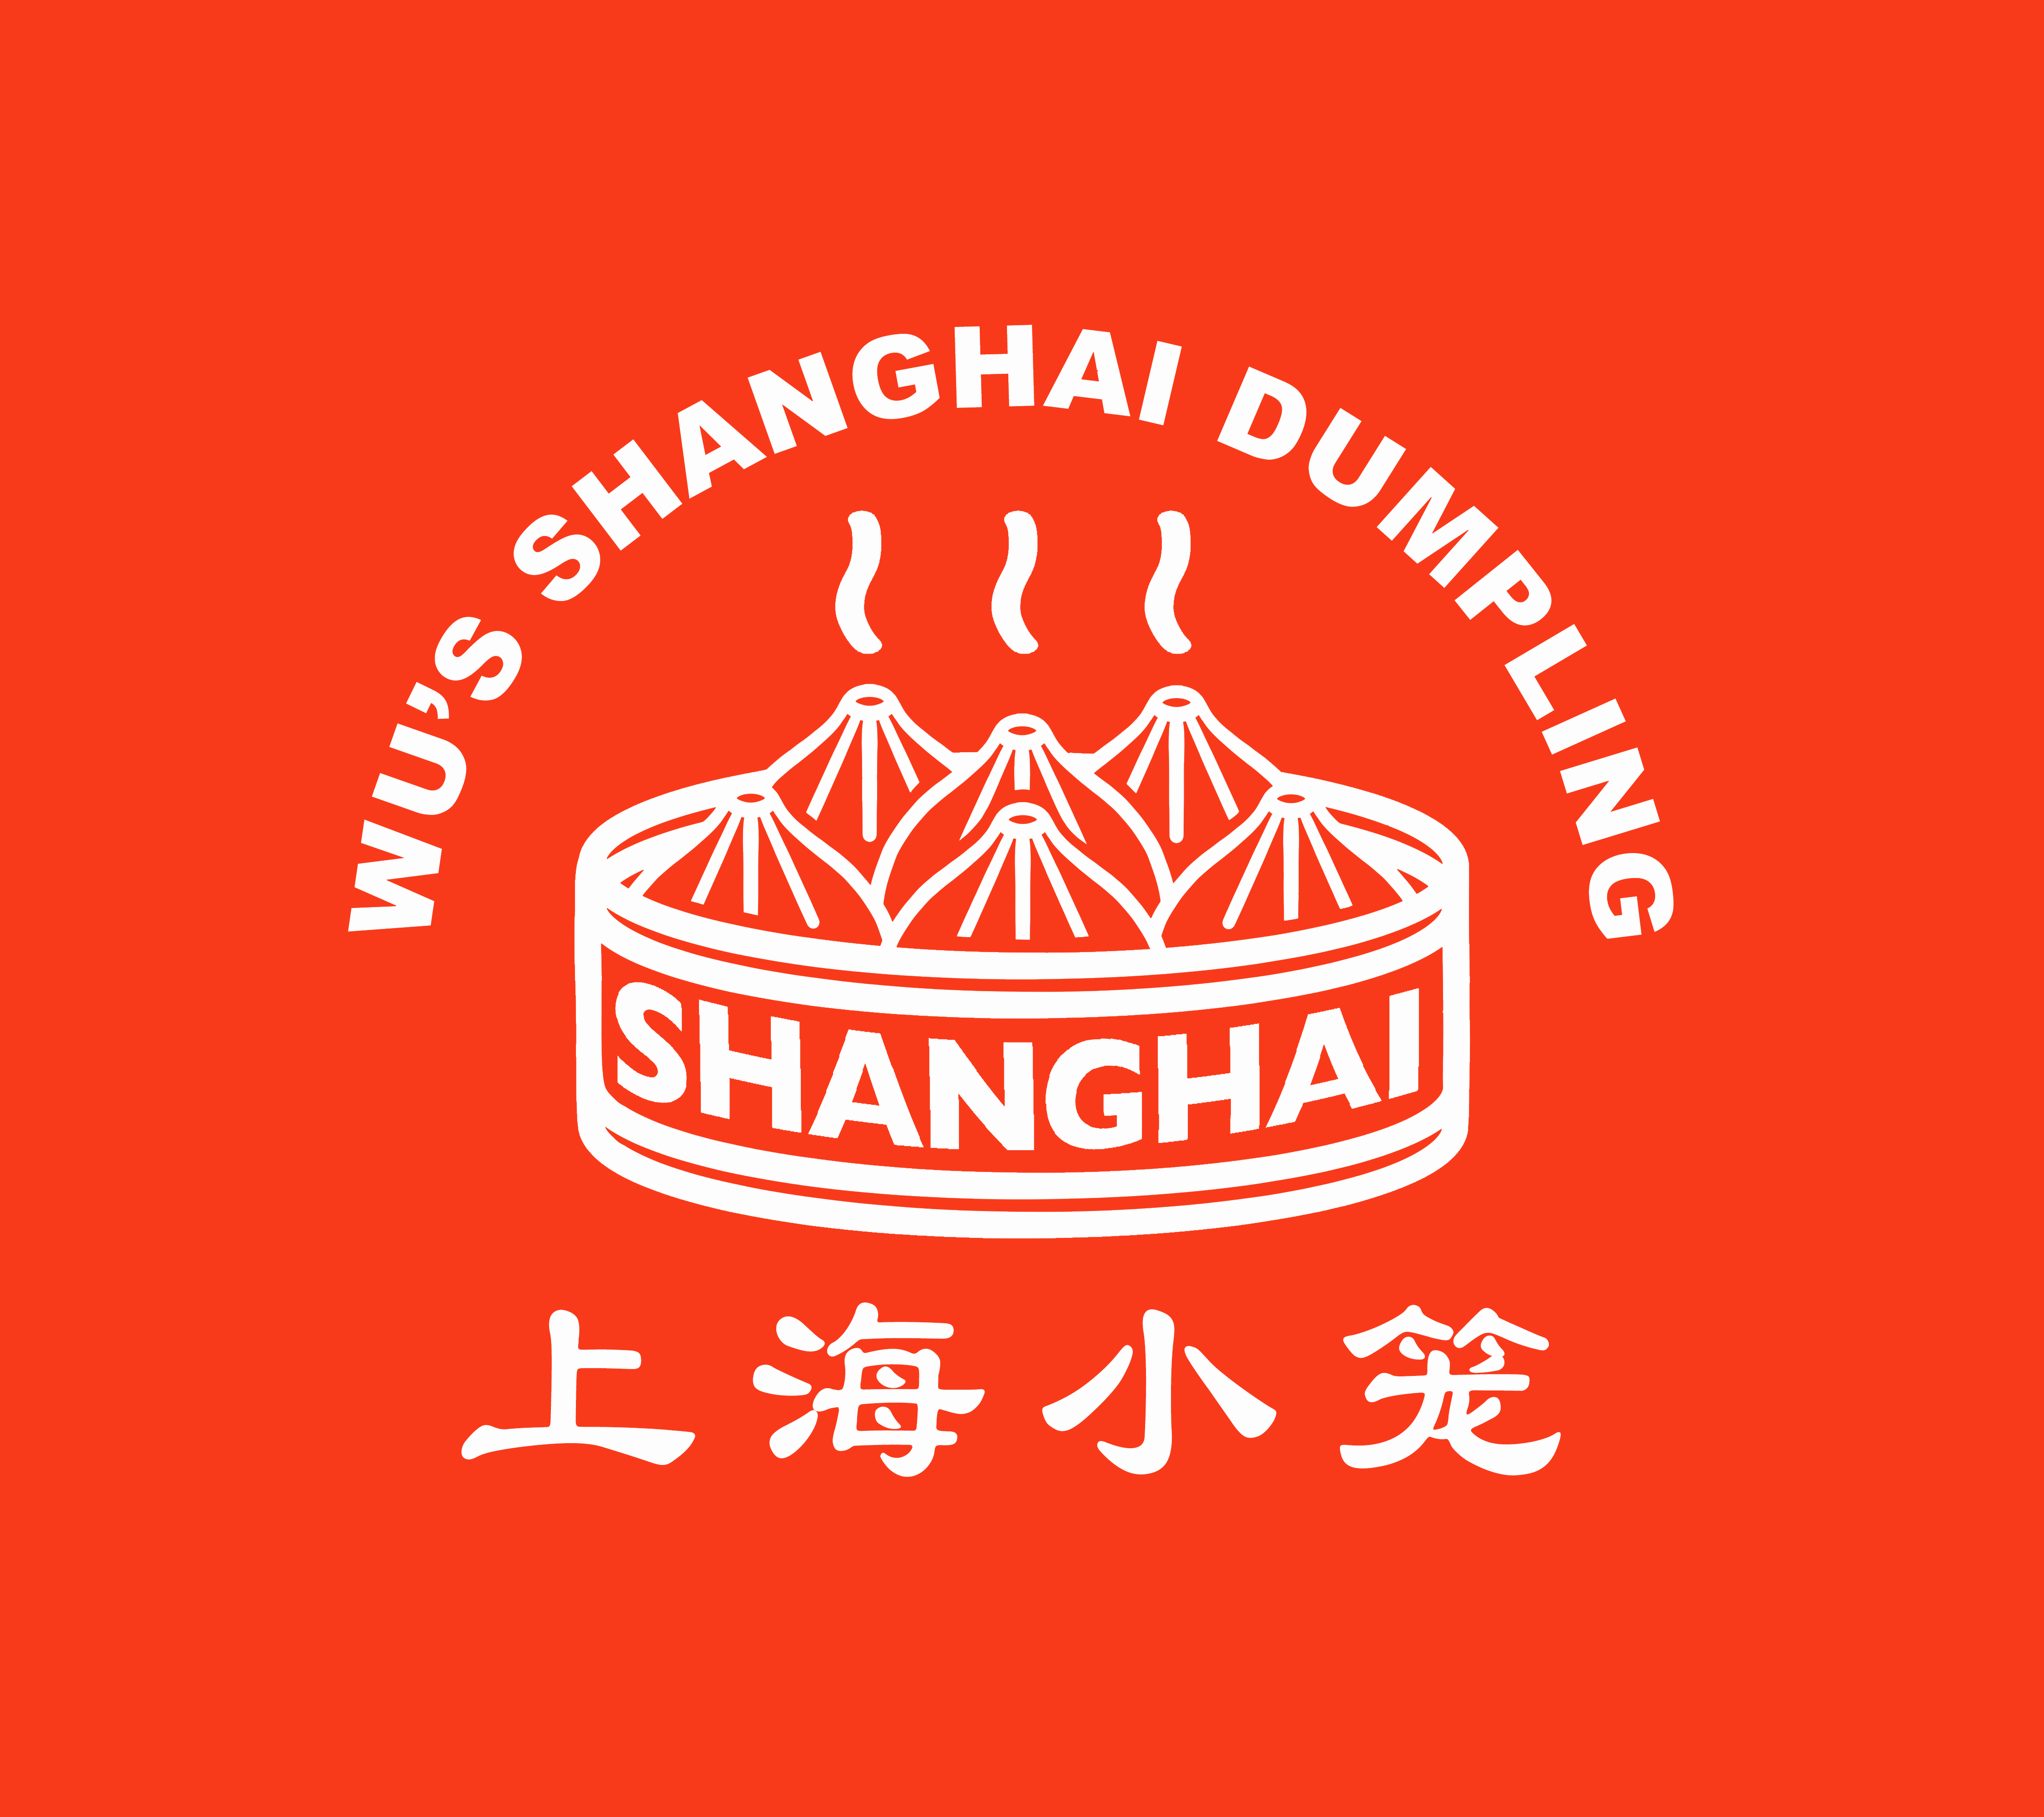 Wu's Shanghai Dumpling - Edison 